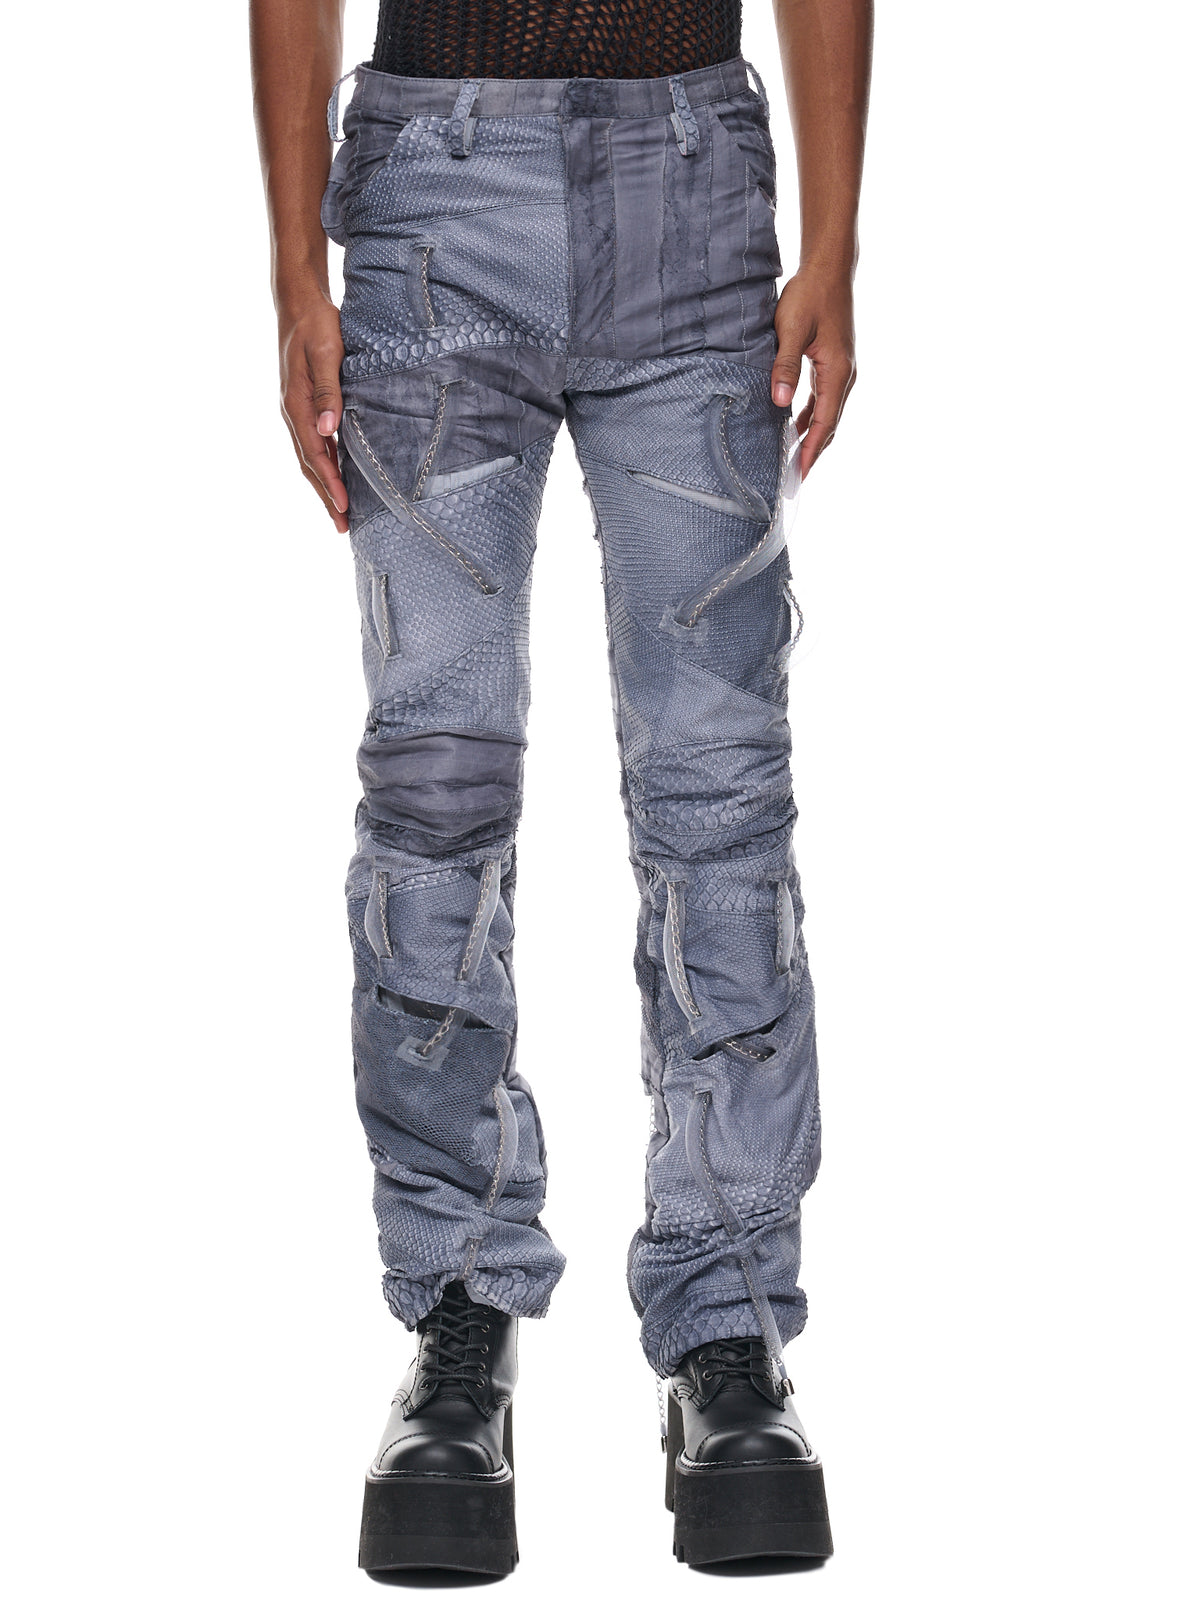 Leather Pierced Pants (SE-31-BP-GRAY)